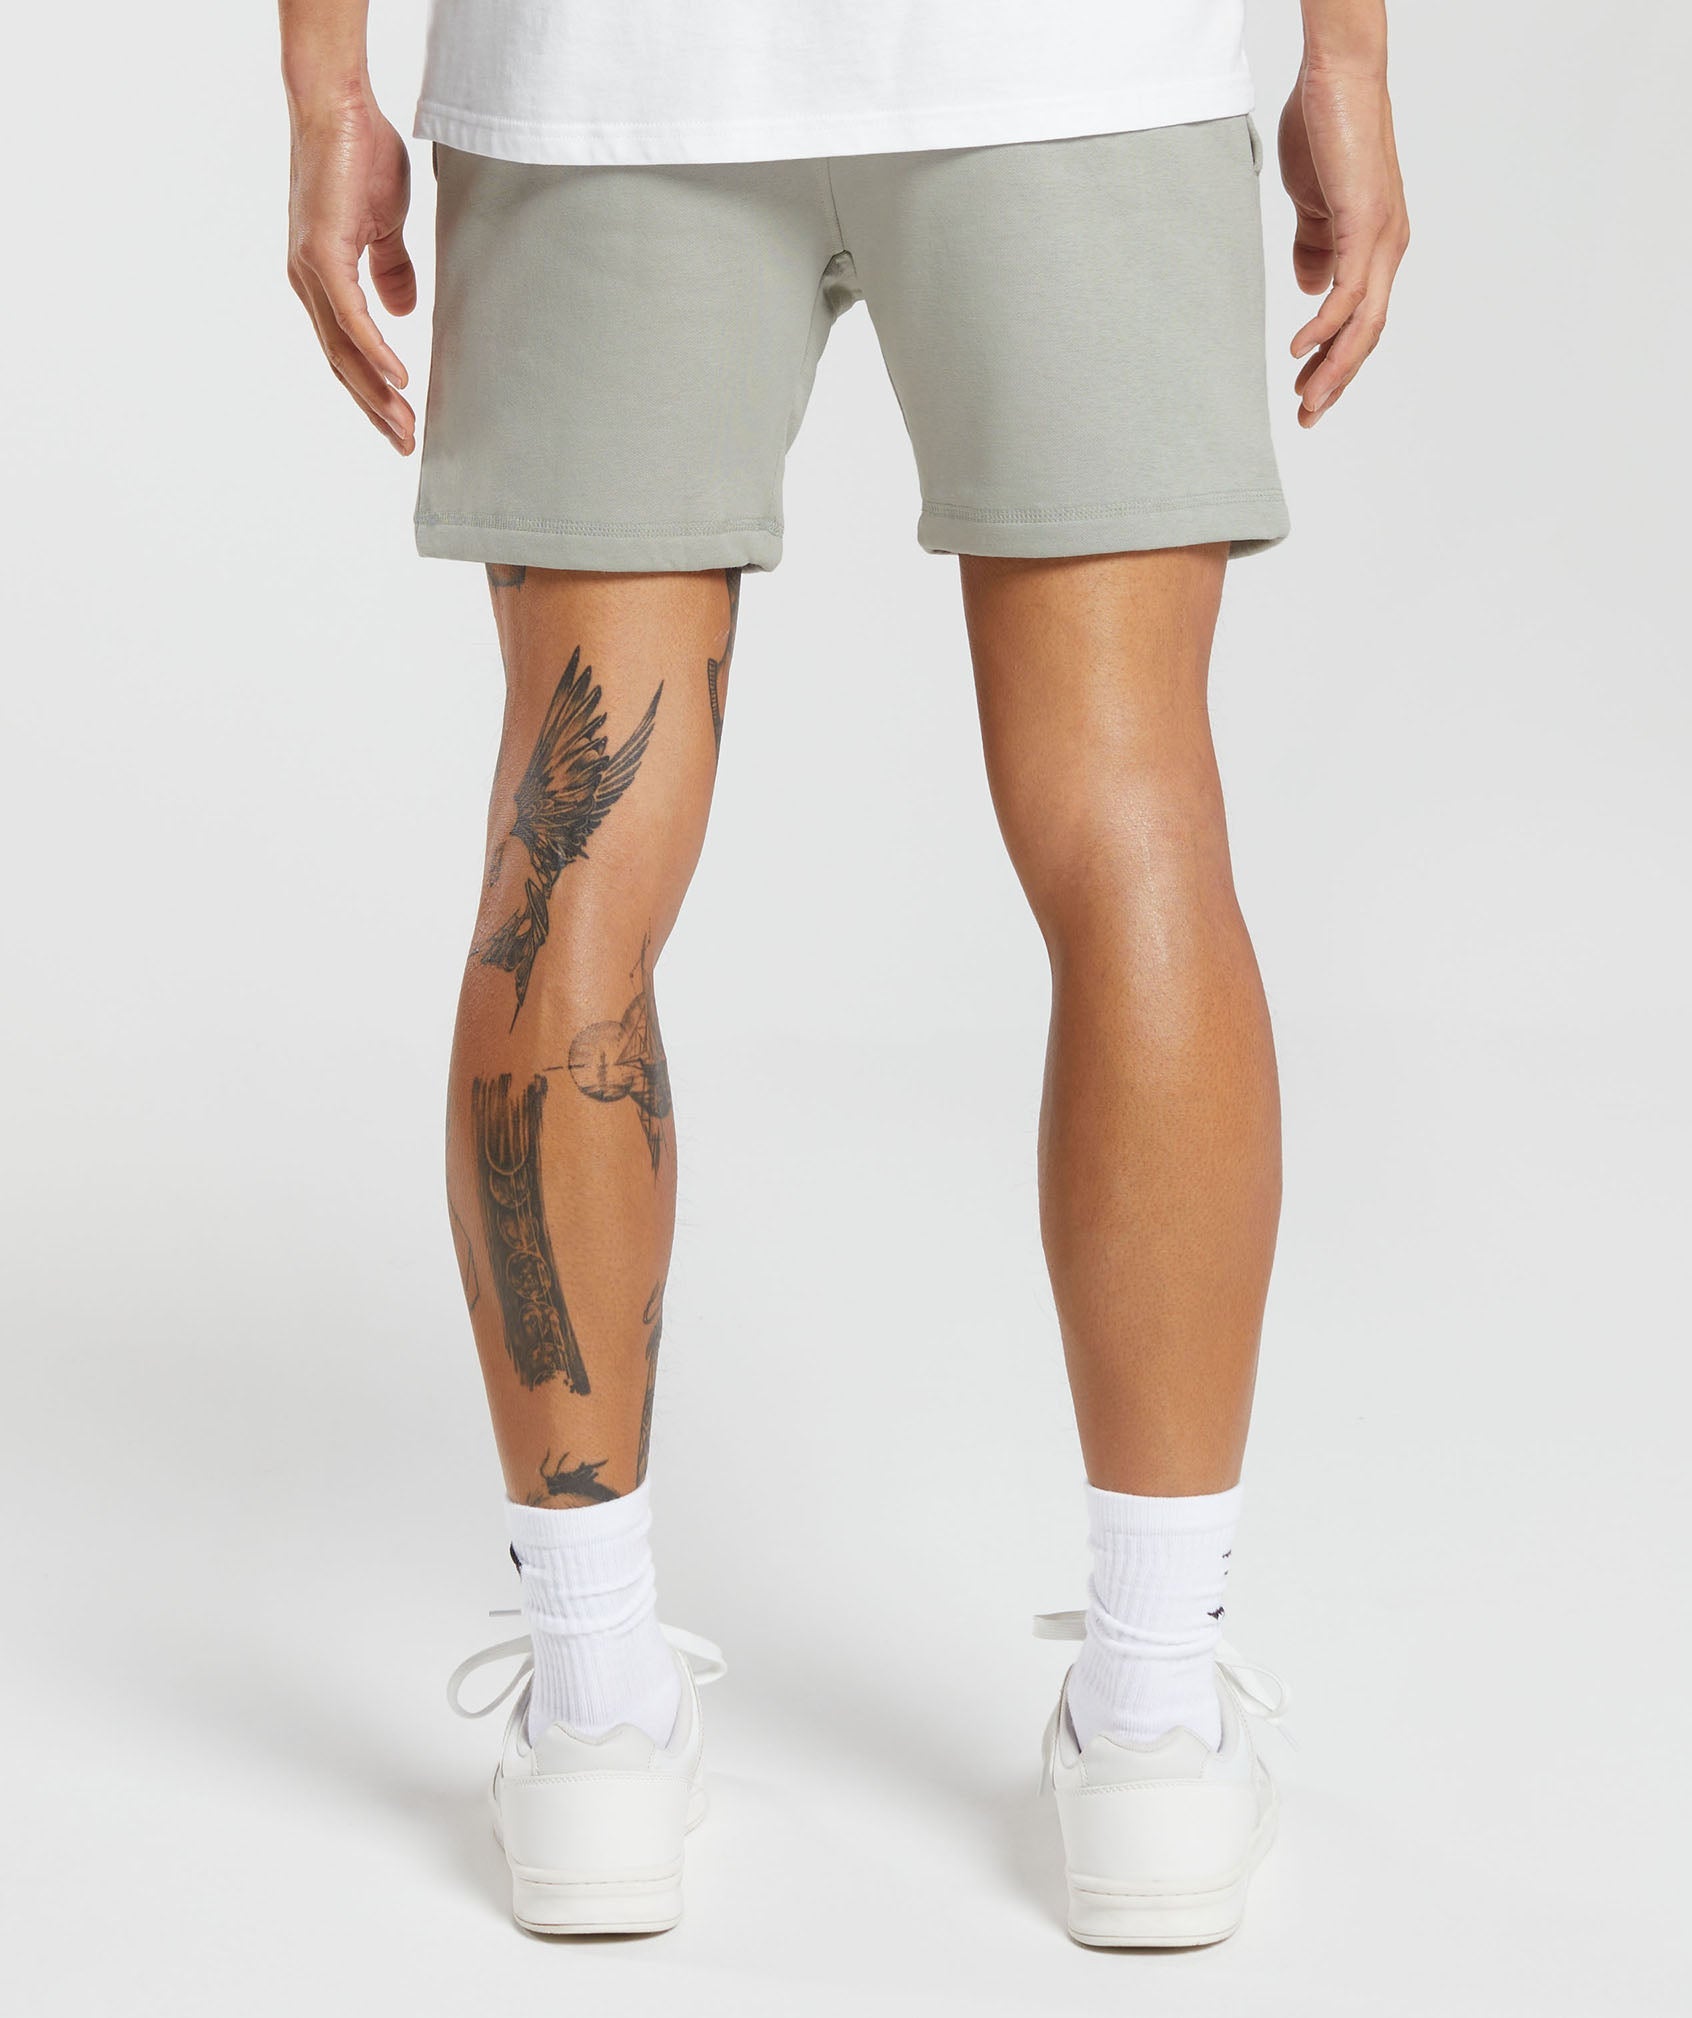 Gymshark Crest 7 Shorts - Stone Grey